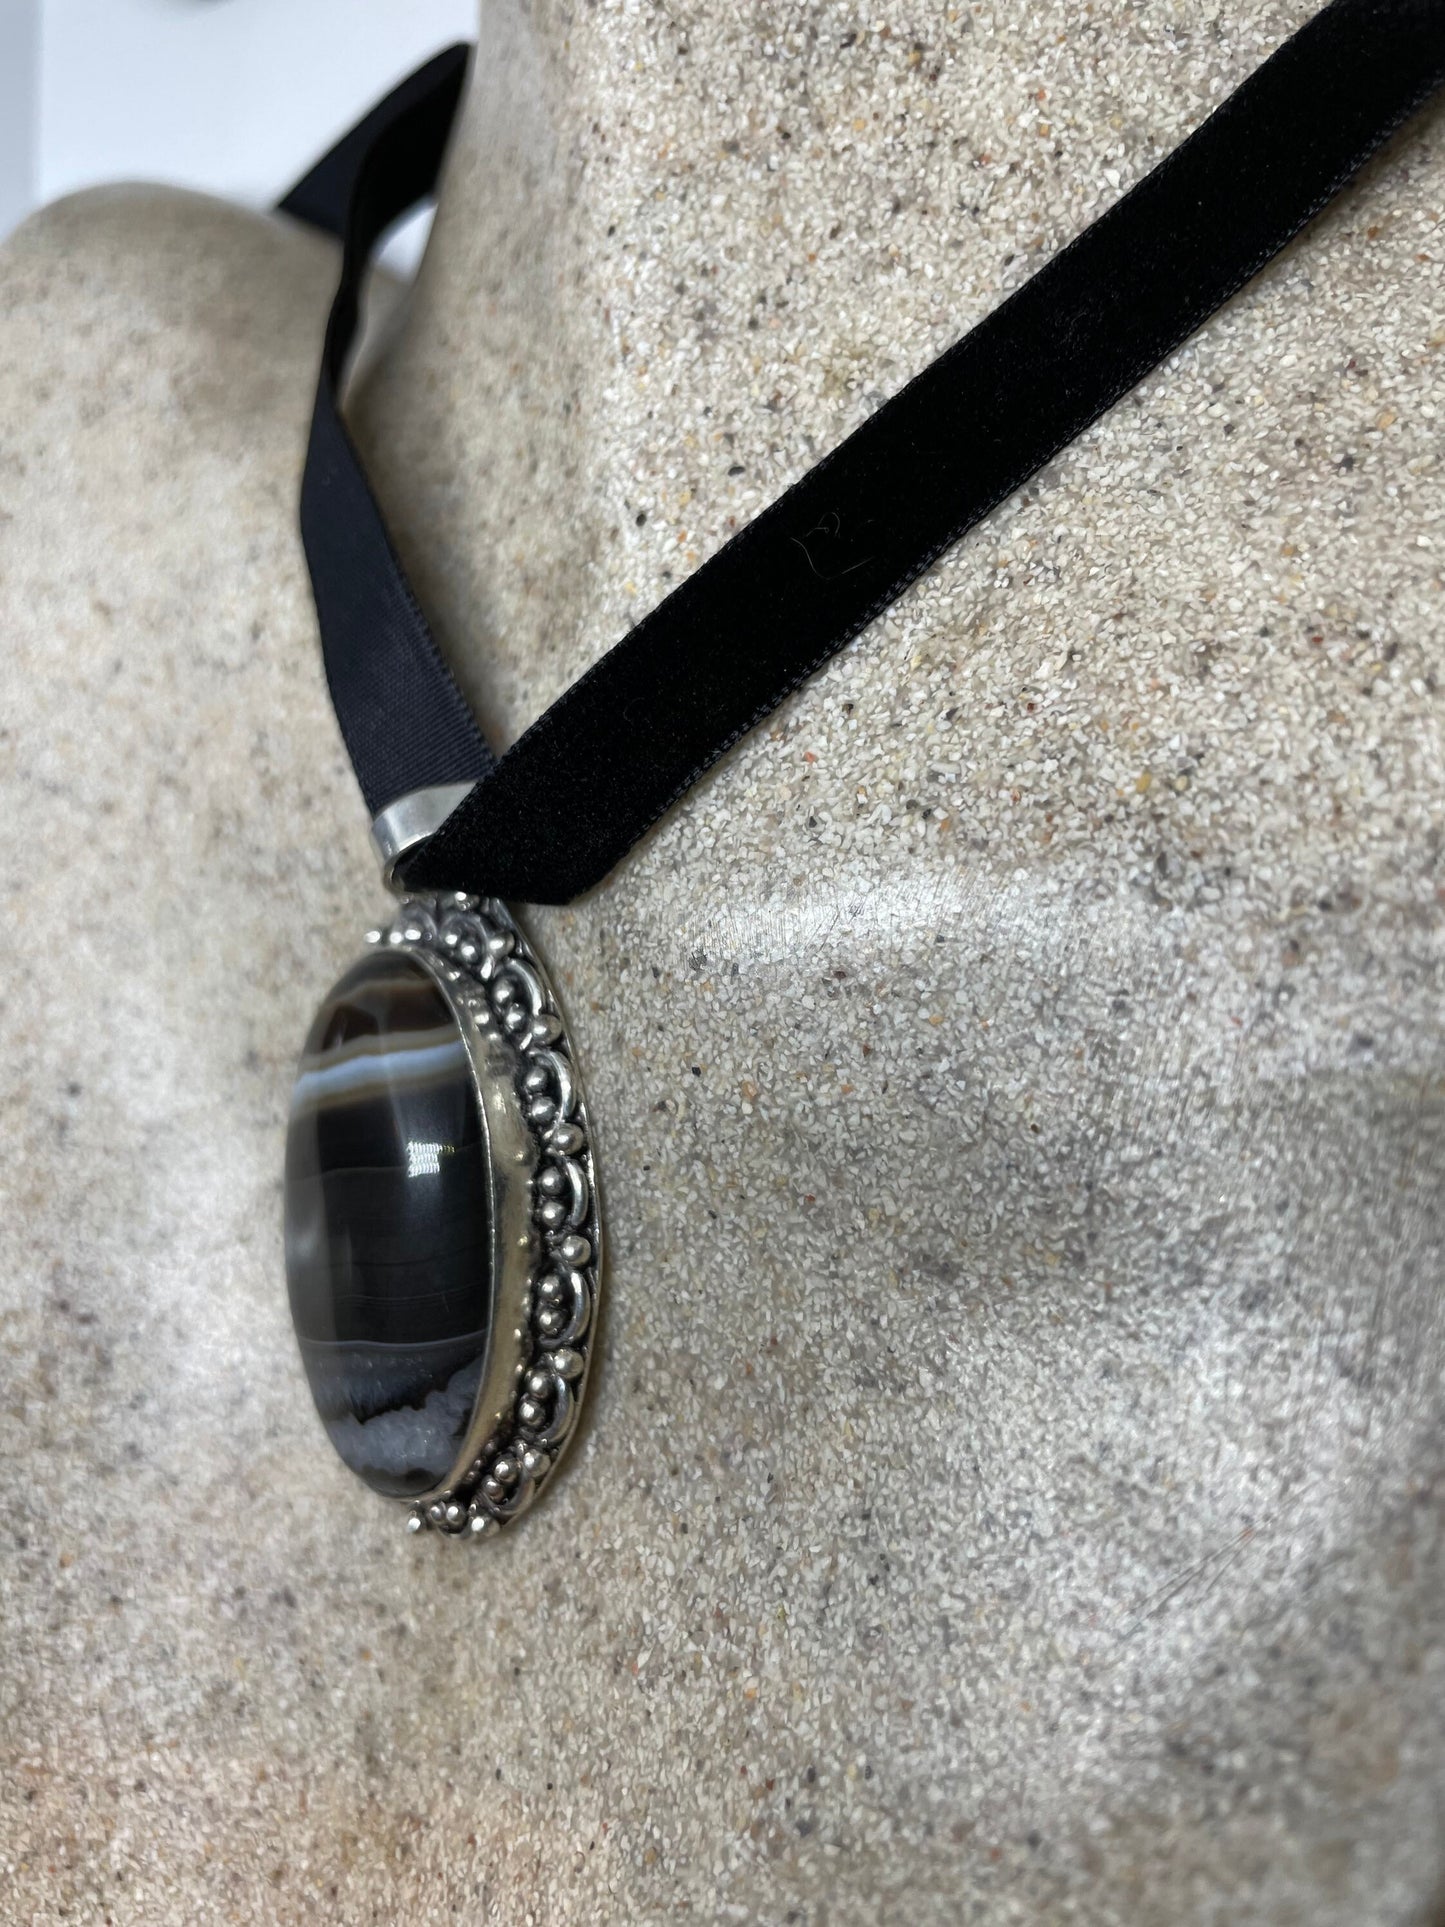 Vintage Silver Genuine Banded Black Onyx Agate Choker Black Velvet Ribbon Pendant Necklace